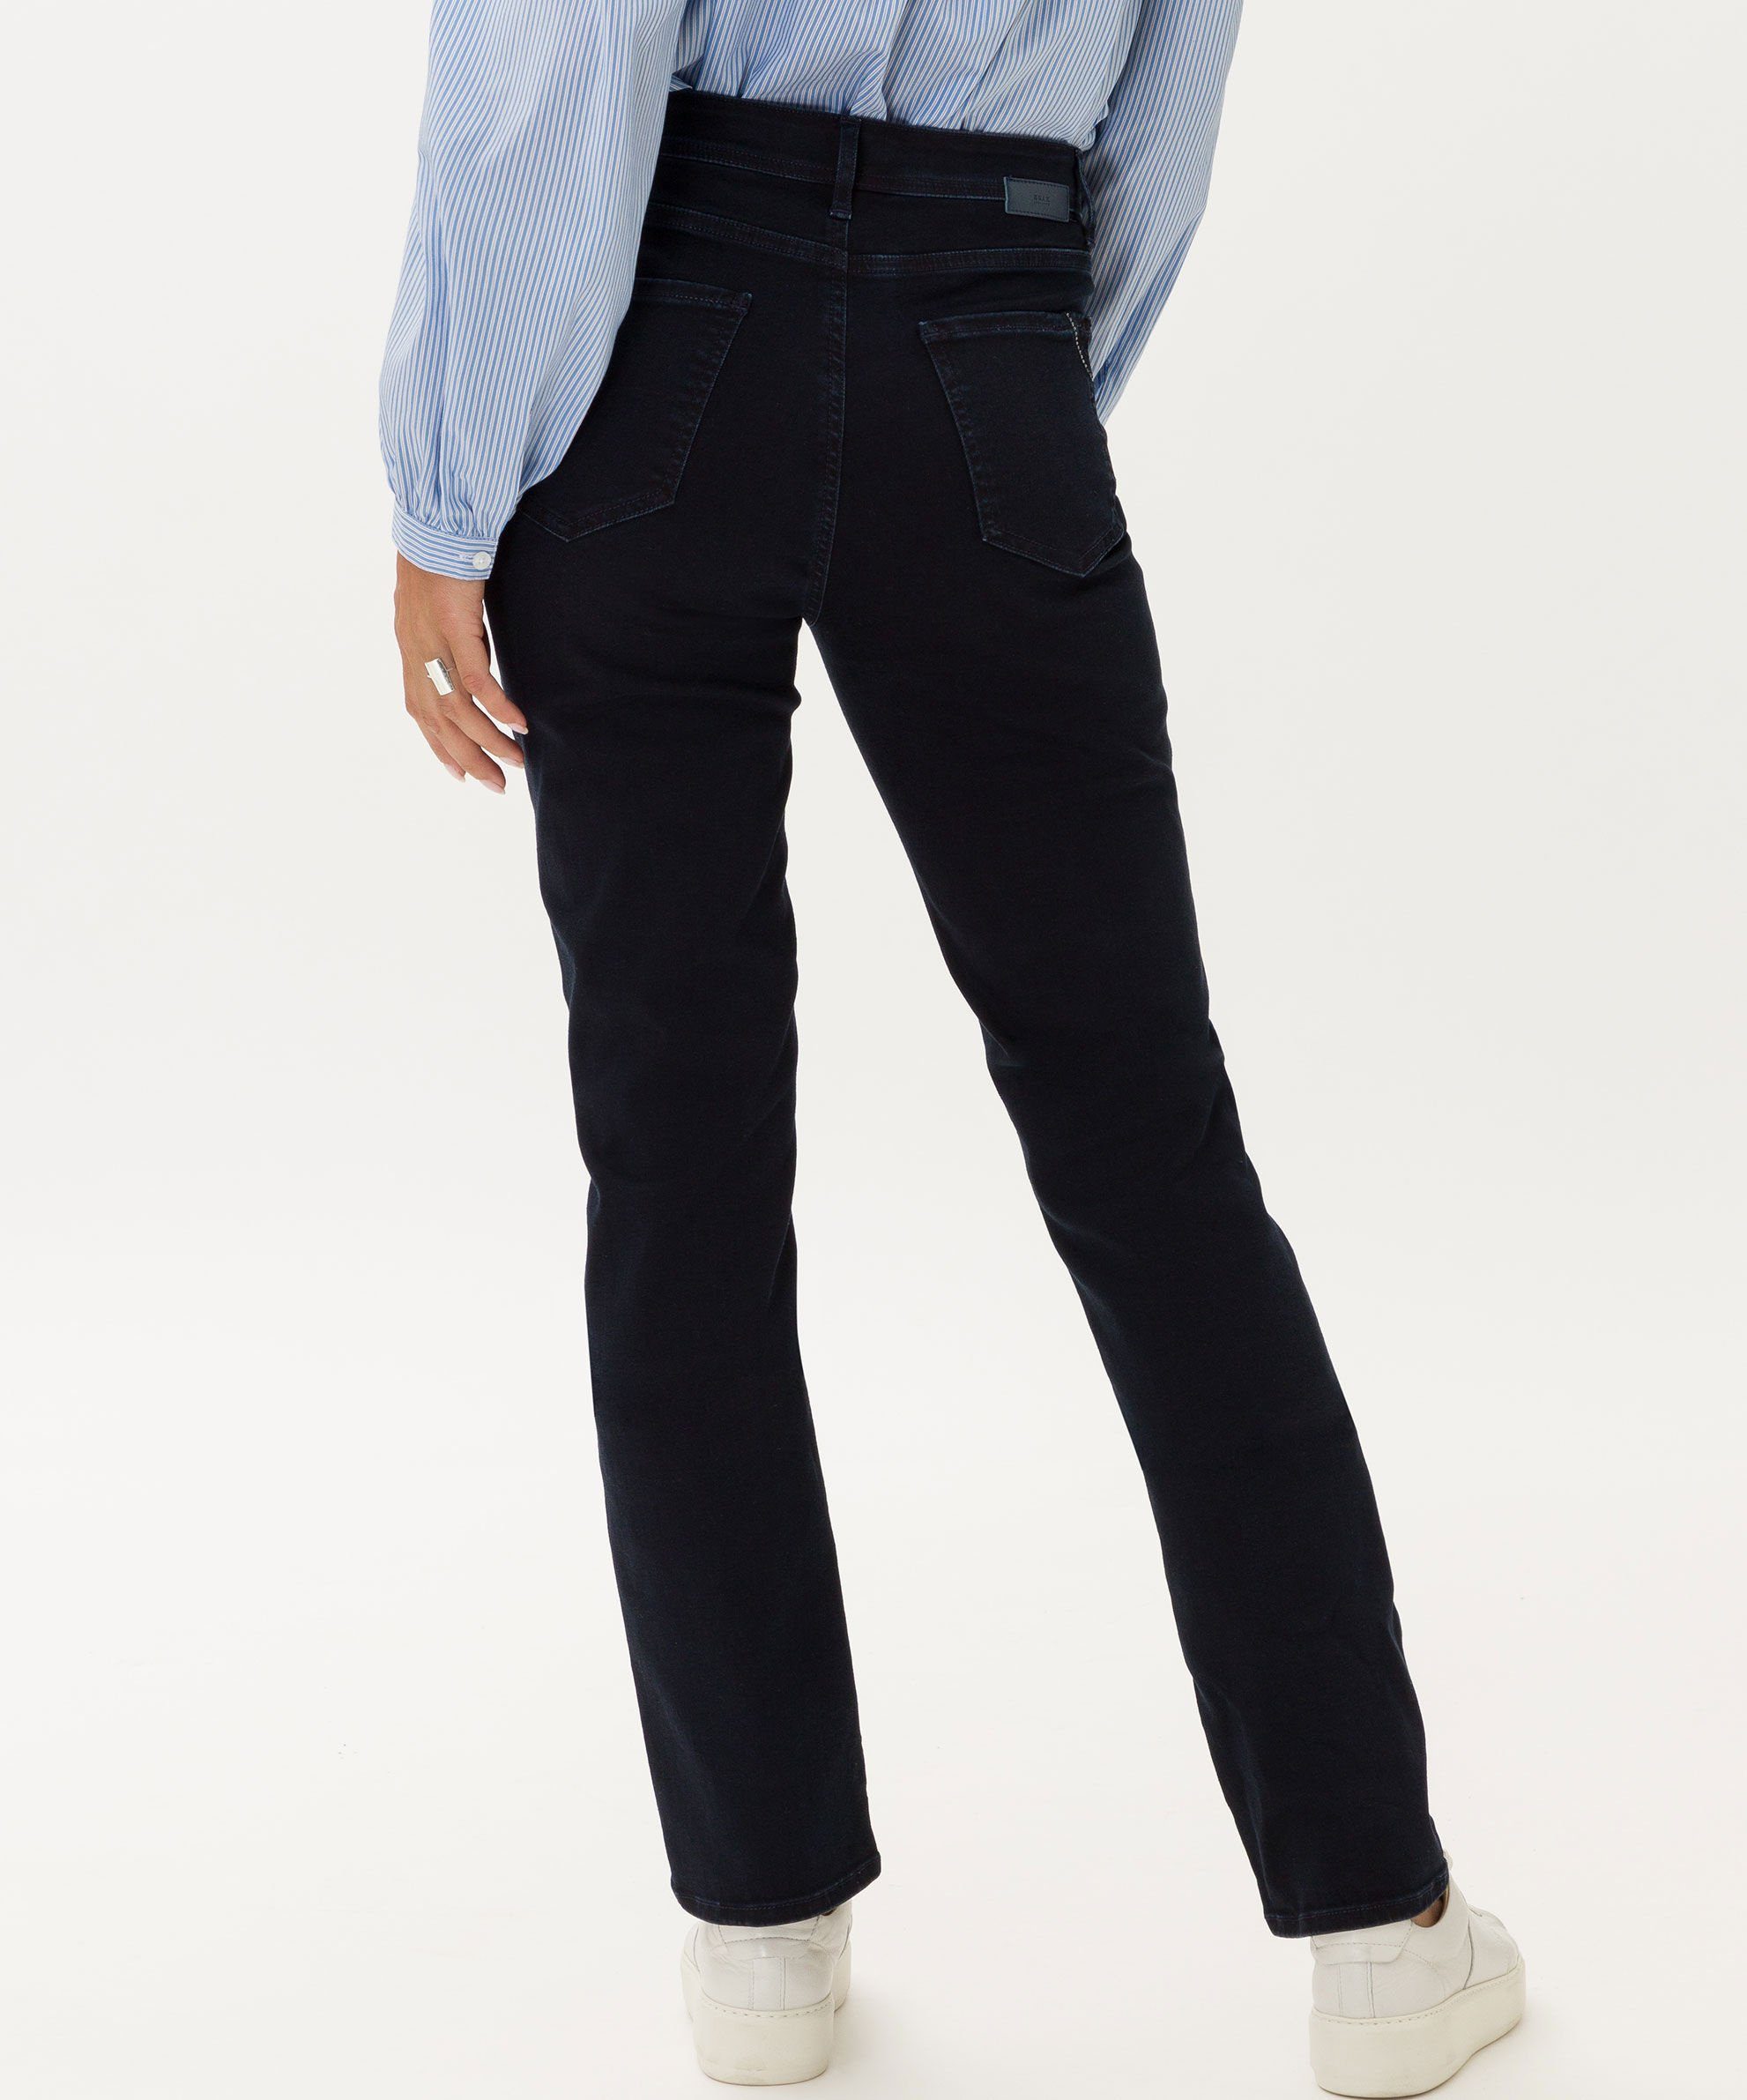 gepflegtem Five-Pocket-Jeans clean in Brax 5-Pocket-Jeans Style dark blue